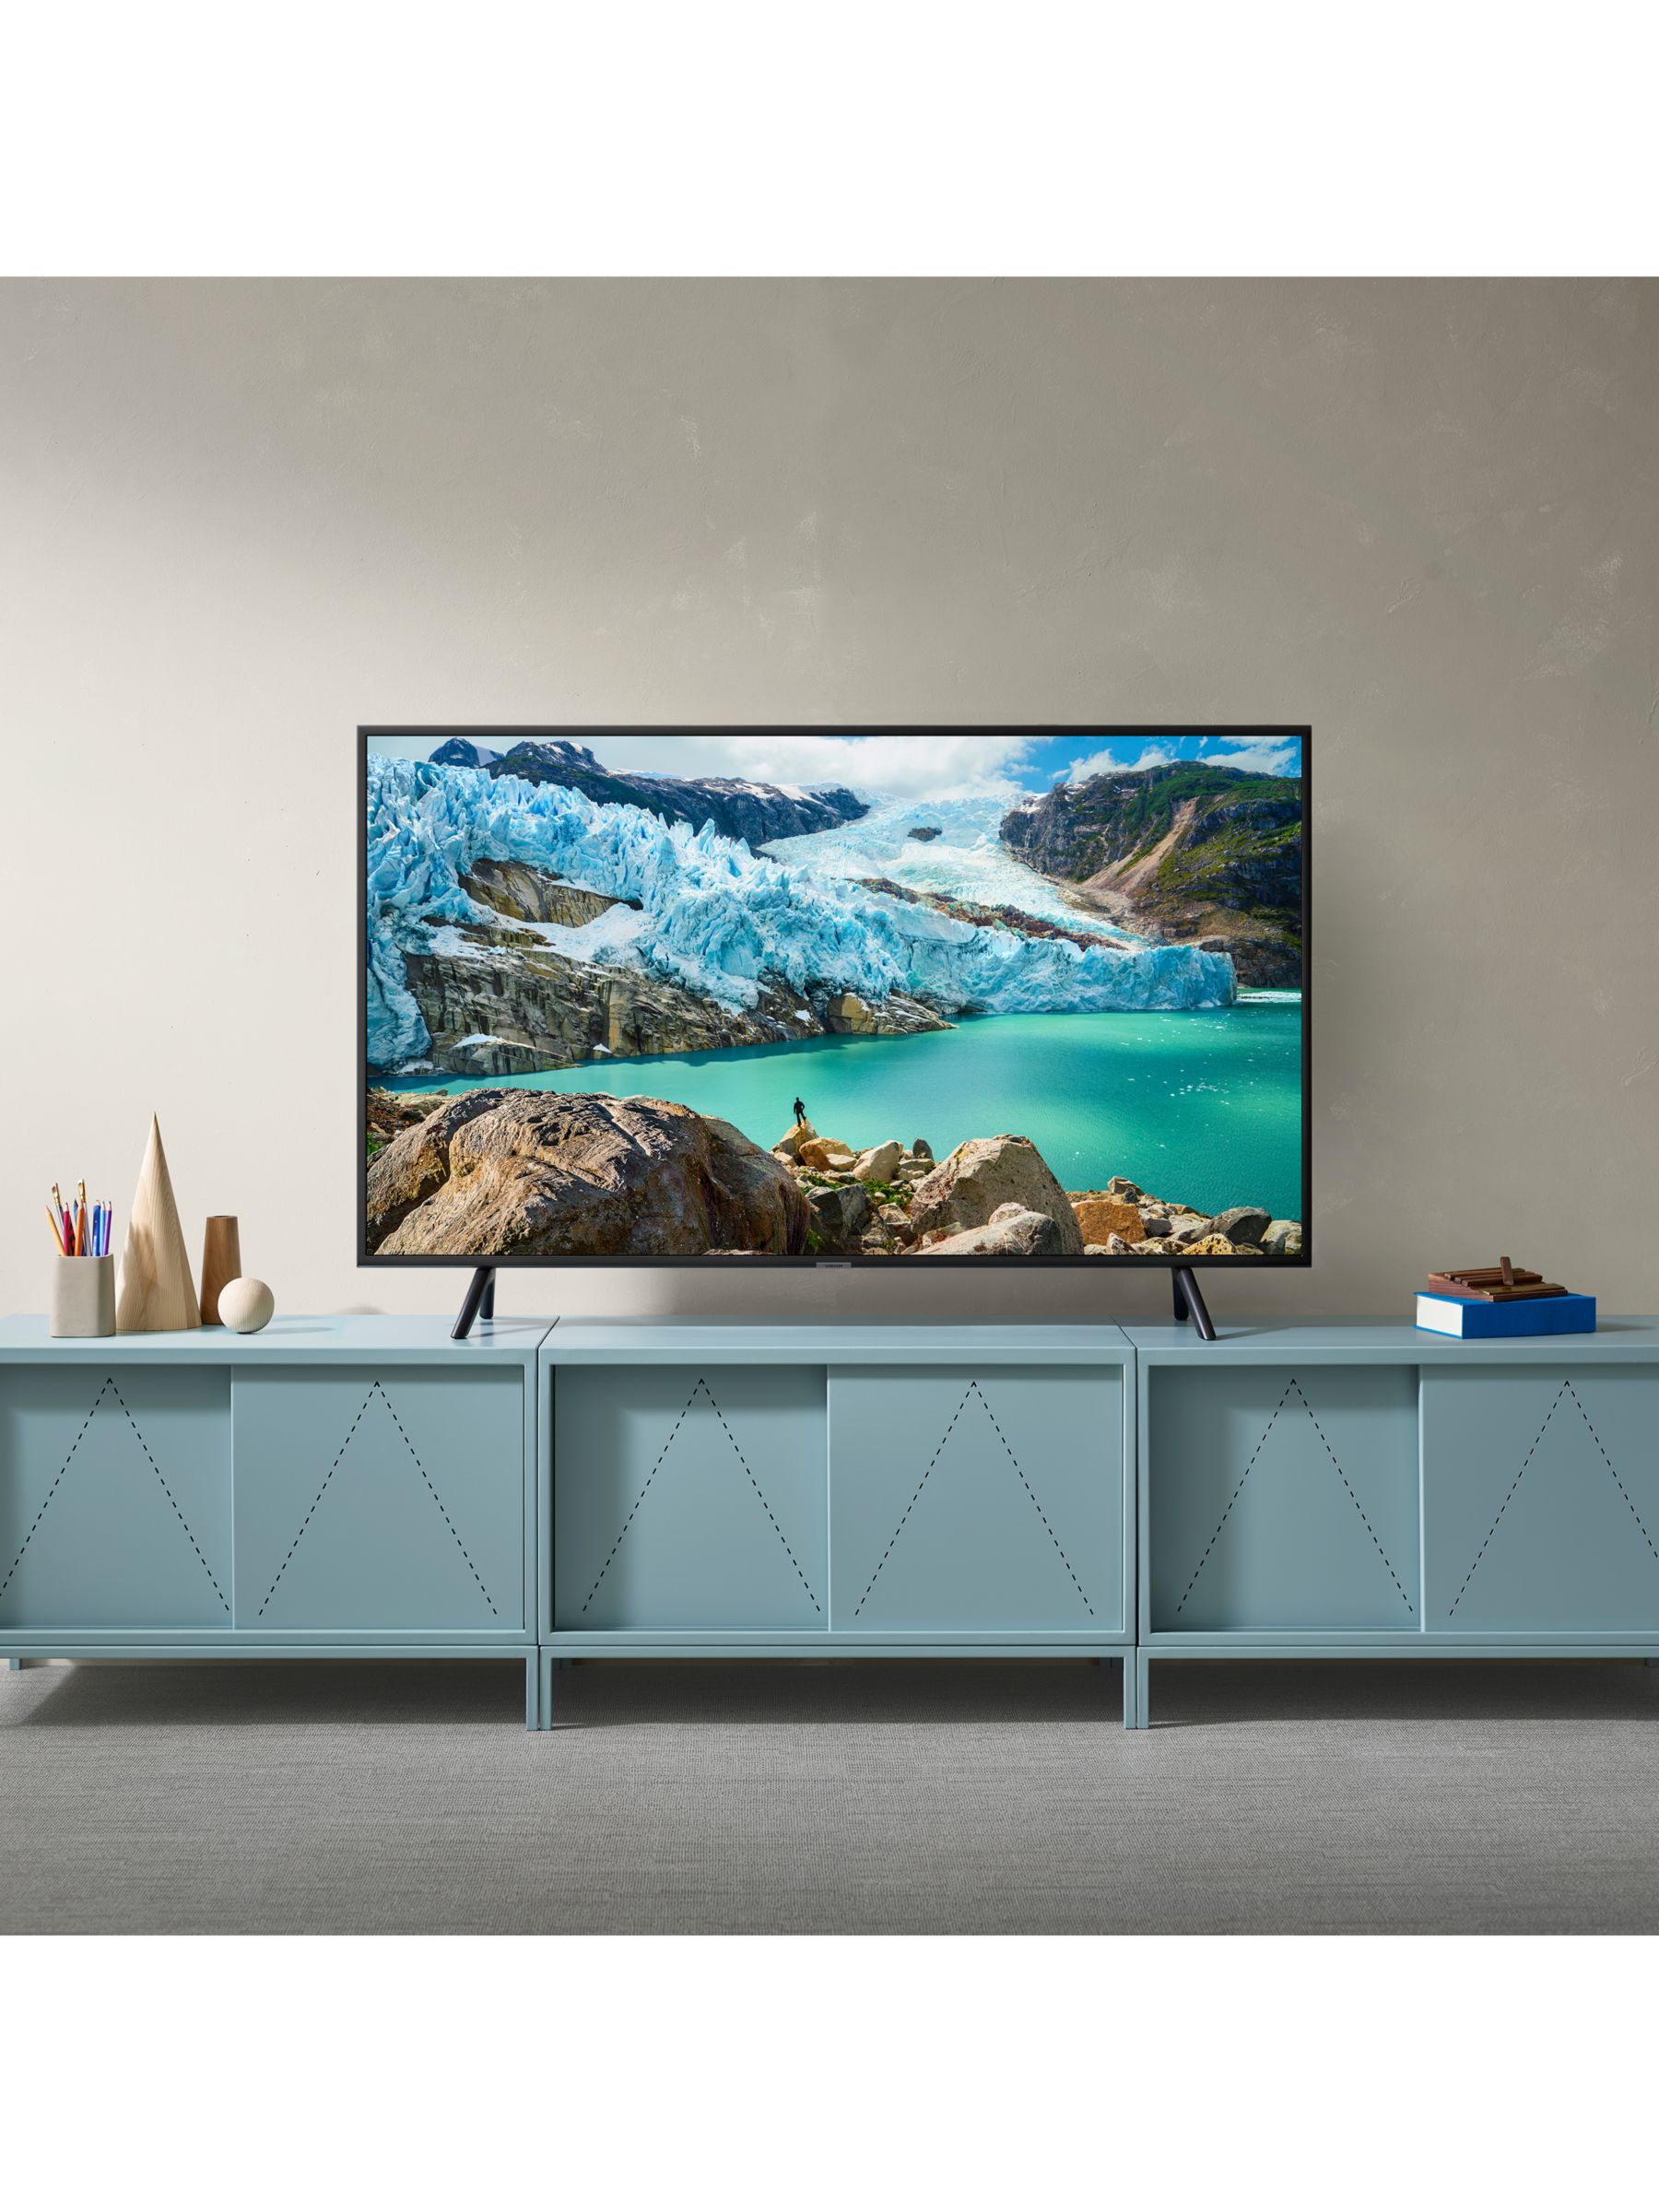 Samsung UE50RU7100 (2019) HDR 4K Ultra HD Smart TV, 50&quot; with TVPlus & Apple TV App, Charcoal ...